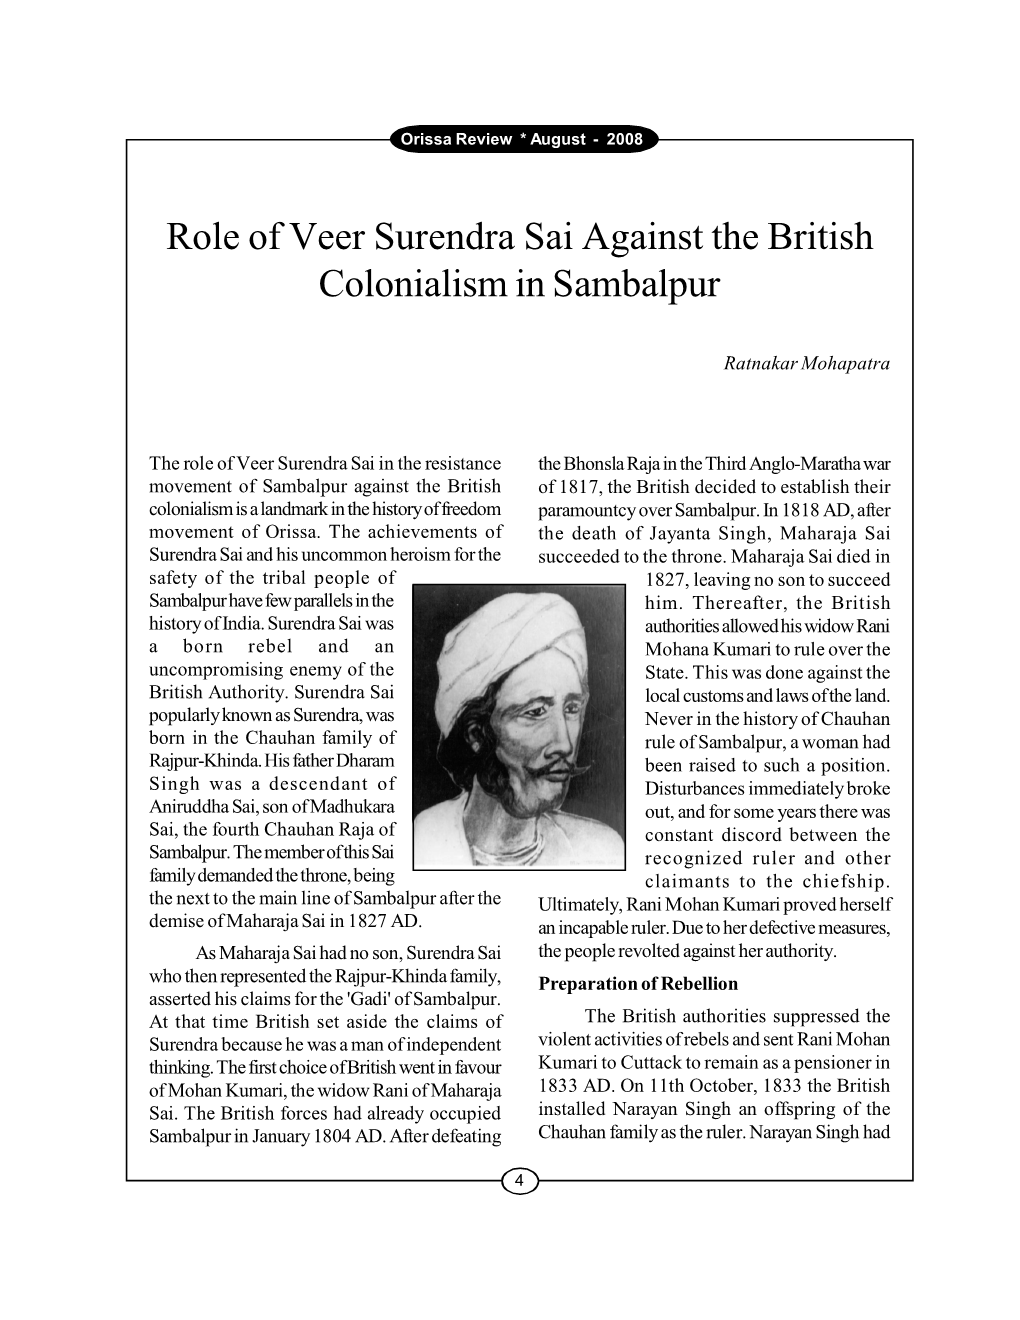 Role of Veer Surendra Sai Against the British Colonialism in Sambalpur